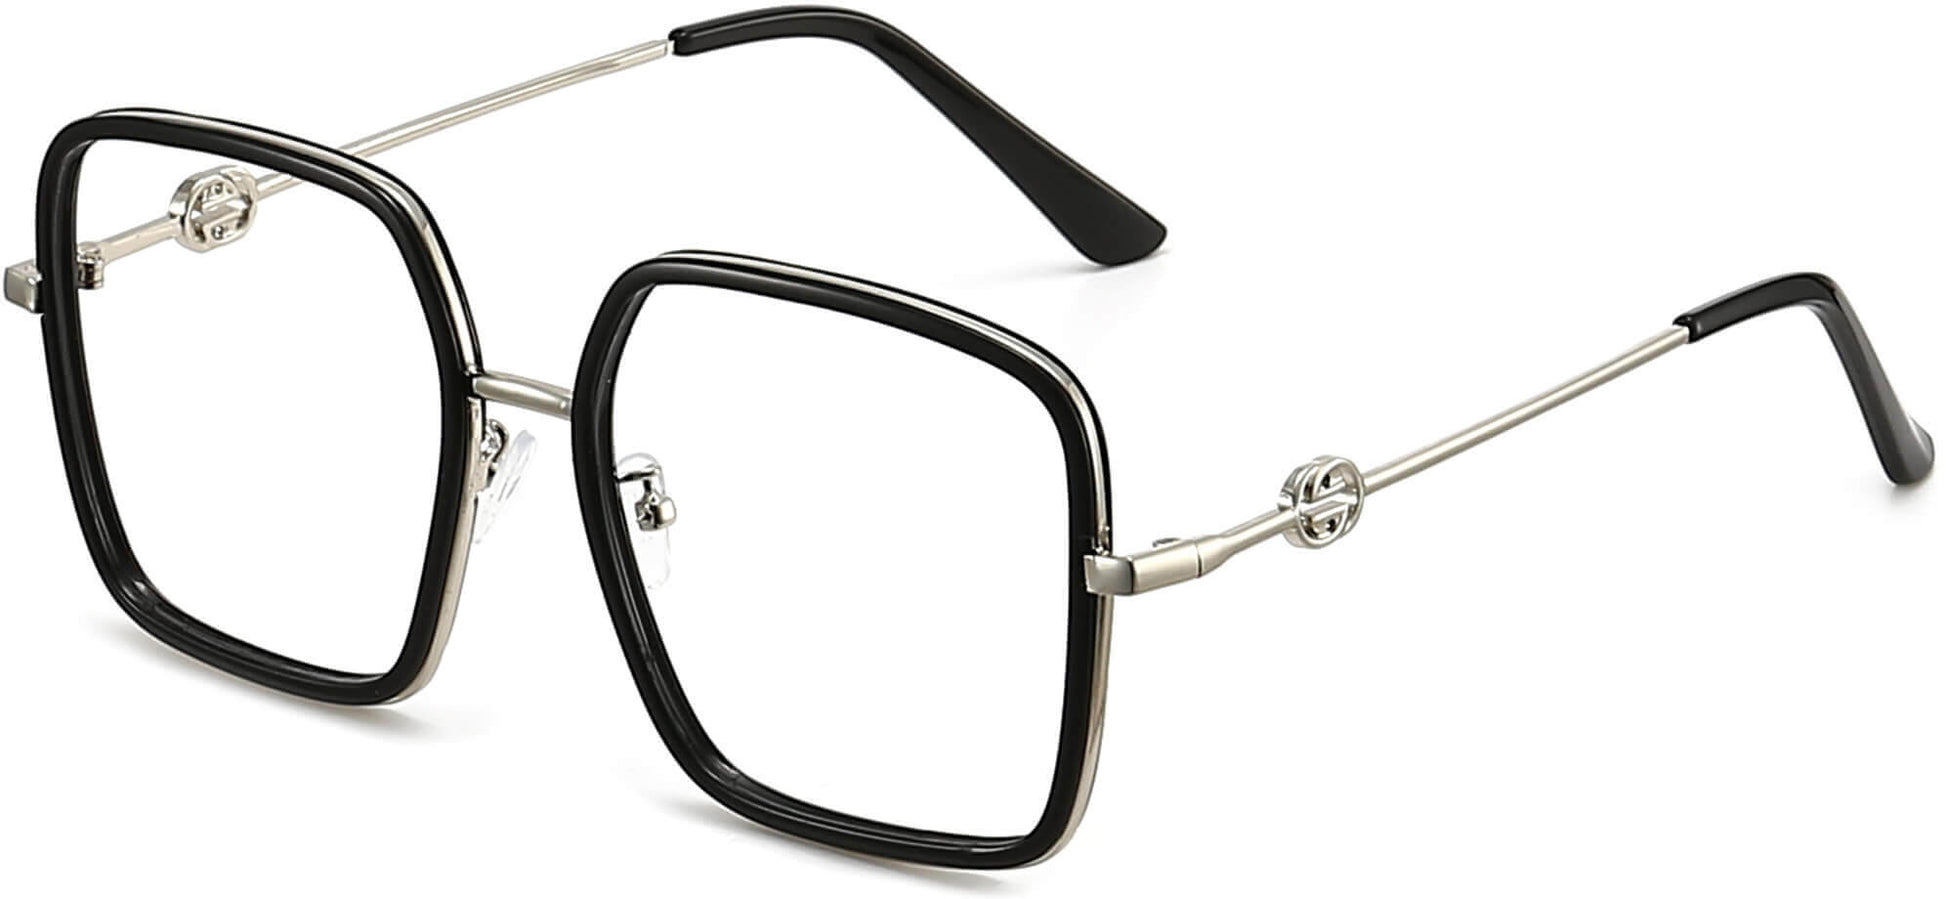 Esme Square Black Eyeglasses from ANRRI, angle view